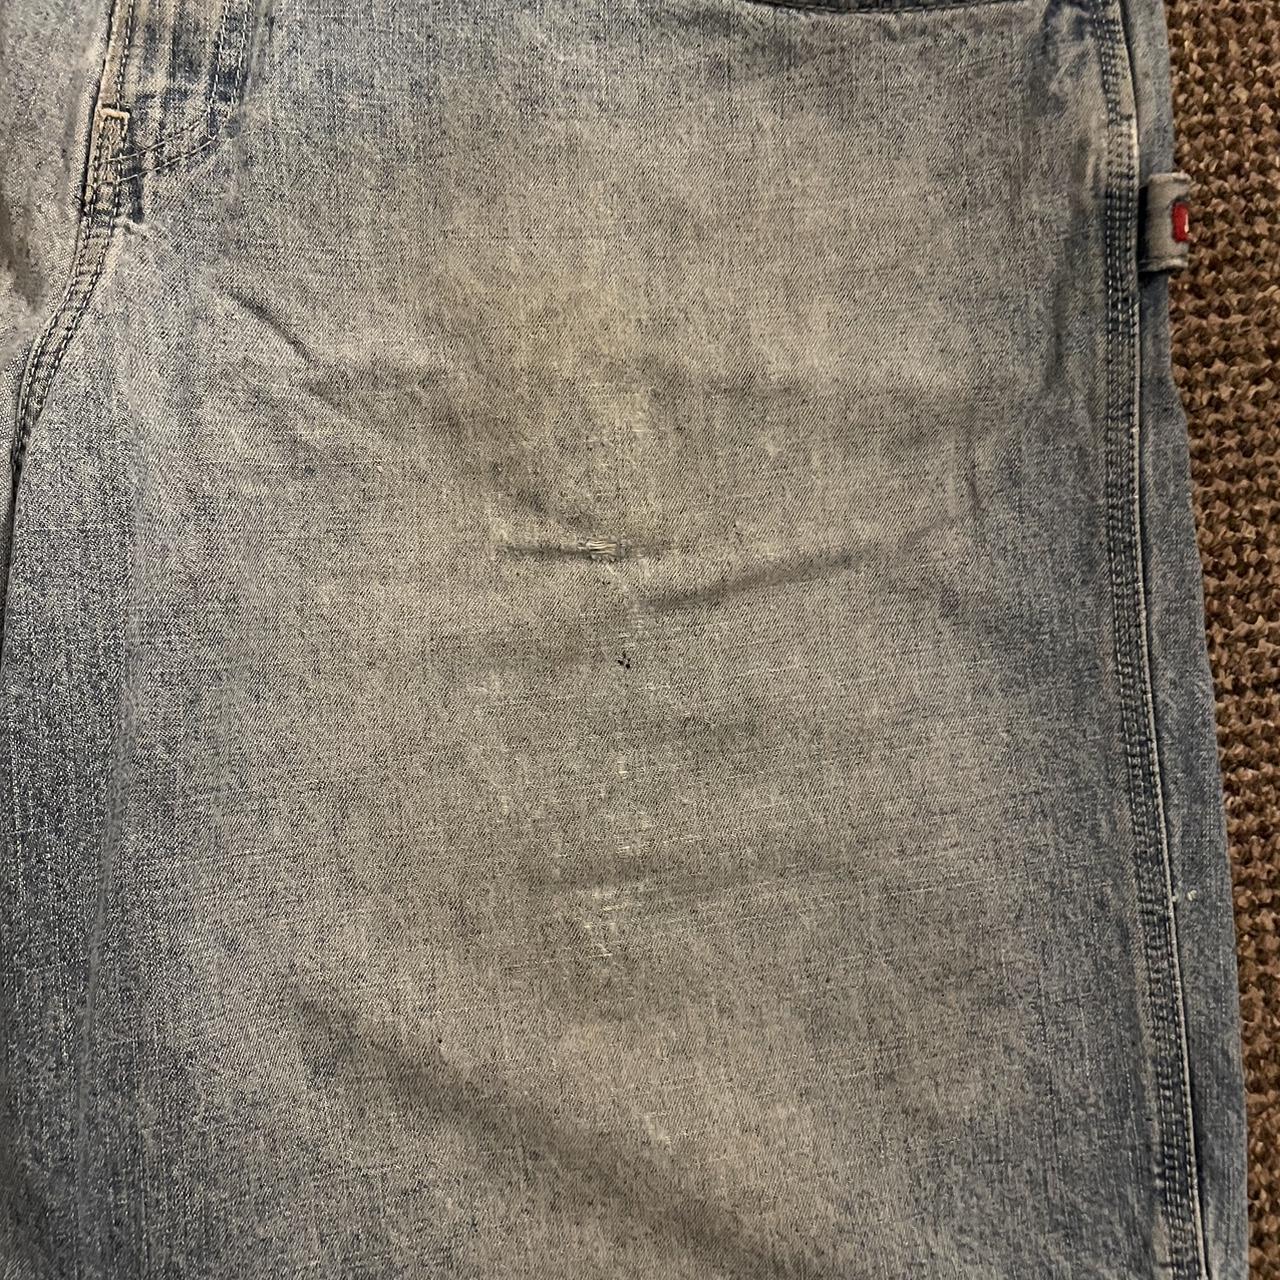 massive superrr baggy JNCO jeans jorts W40 hard to... - Depop